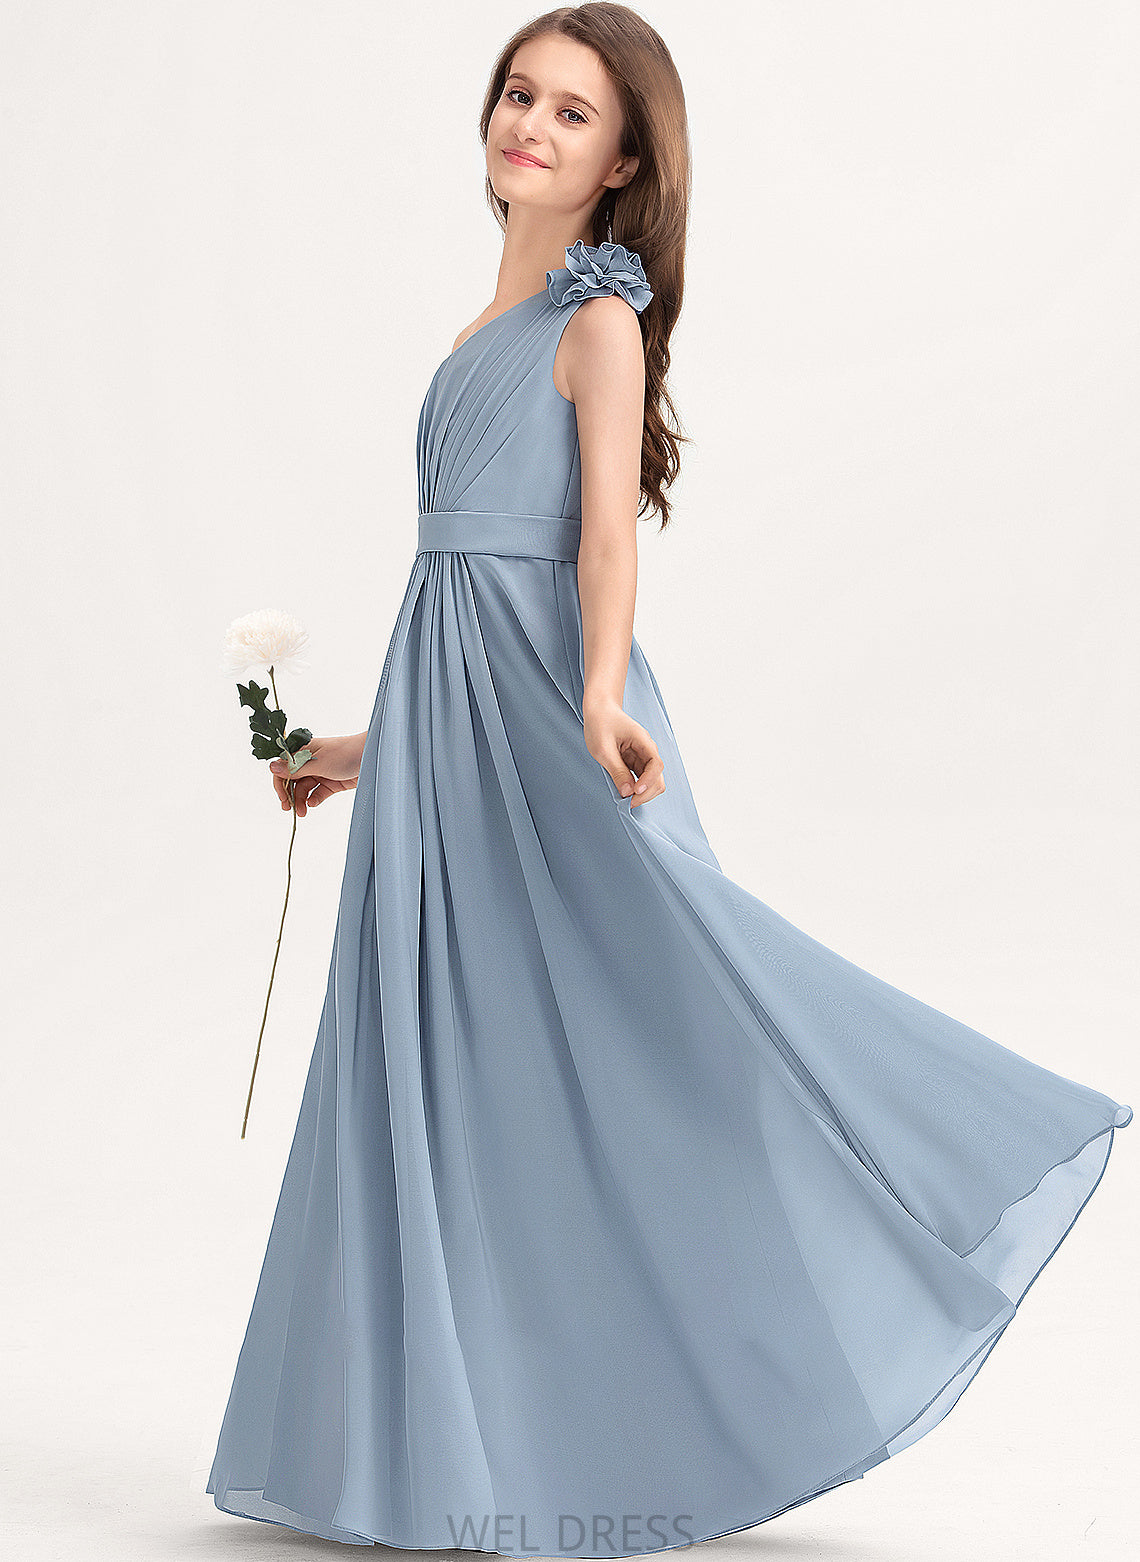 A-Line Chiffon With Flower(s) Junior Bridesmaid Dresses One-Shoulder Ruffle Tessa Floor-Length